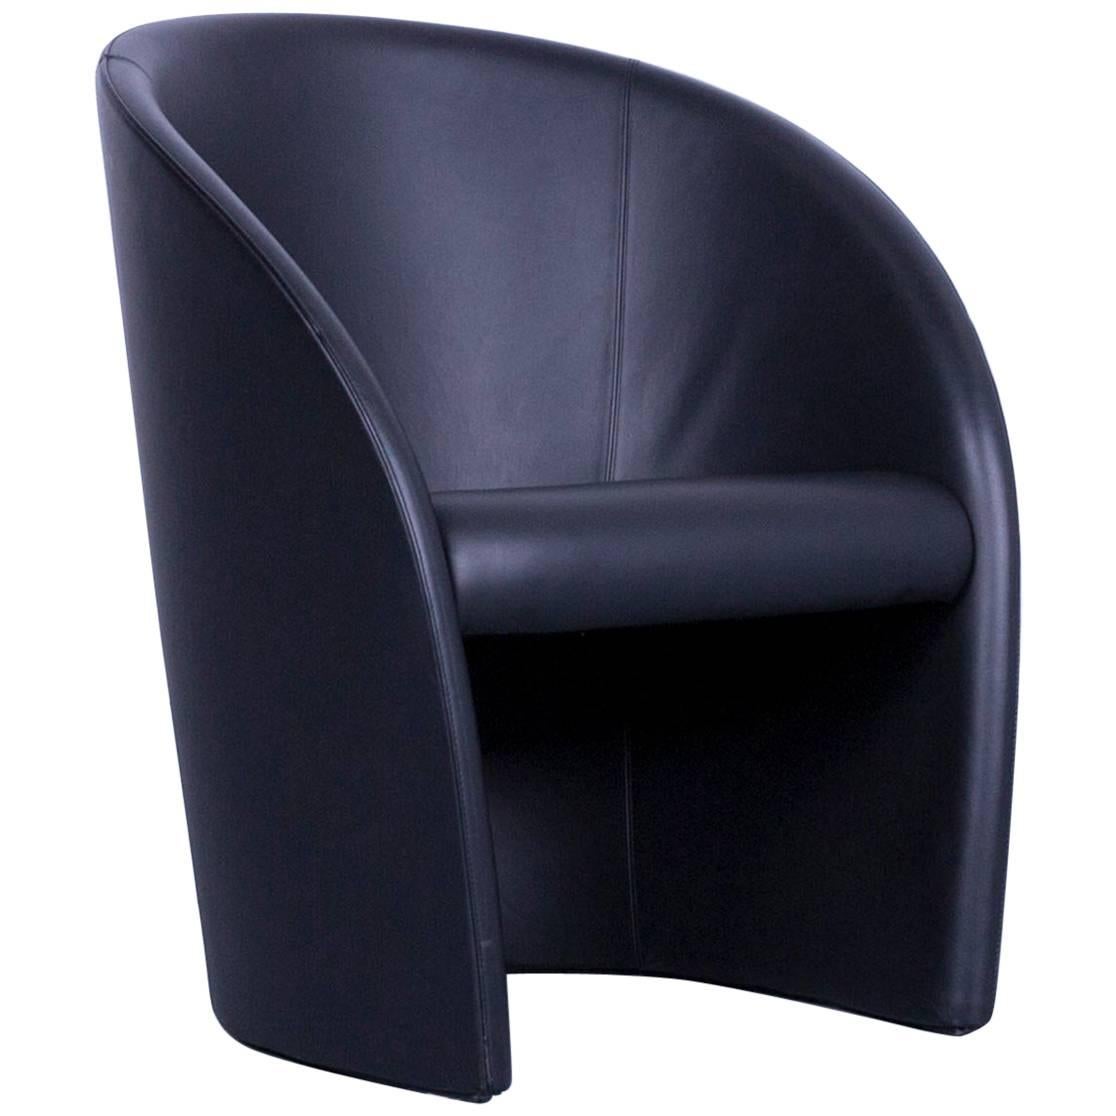 Poltrona Frau Intervista Designer Leather Armchair Black One-Seat